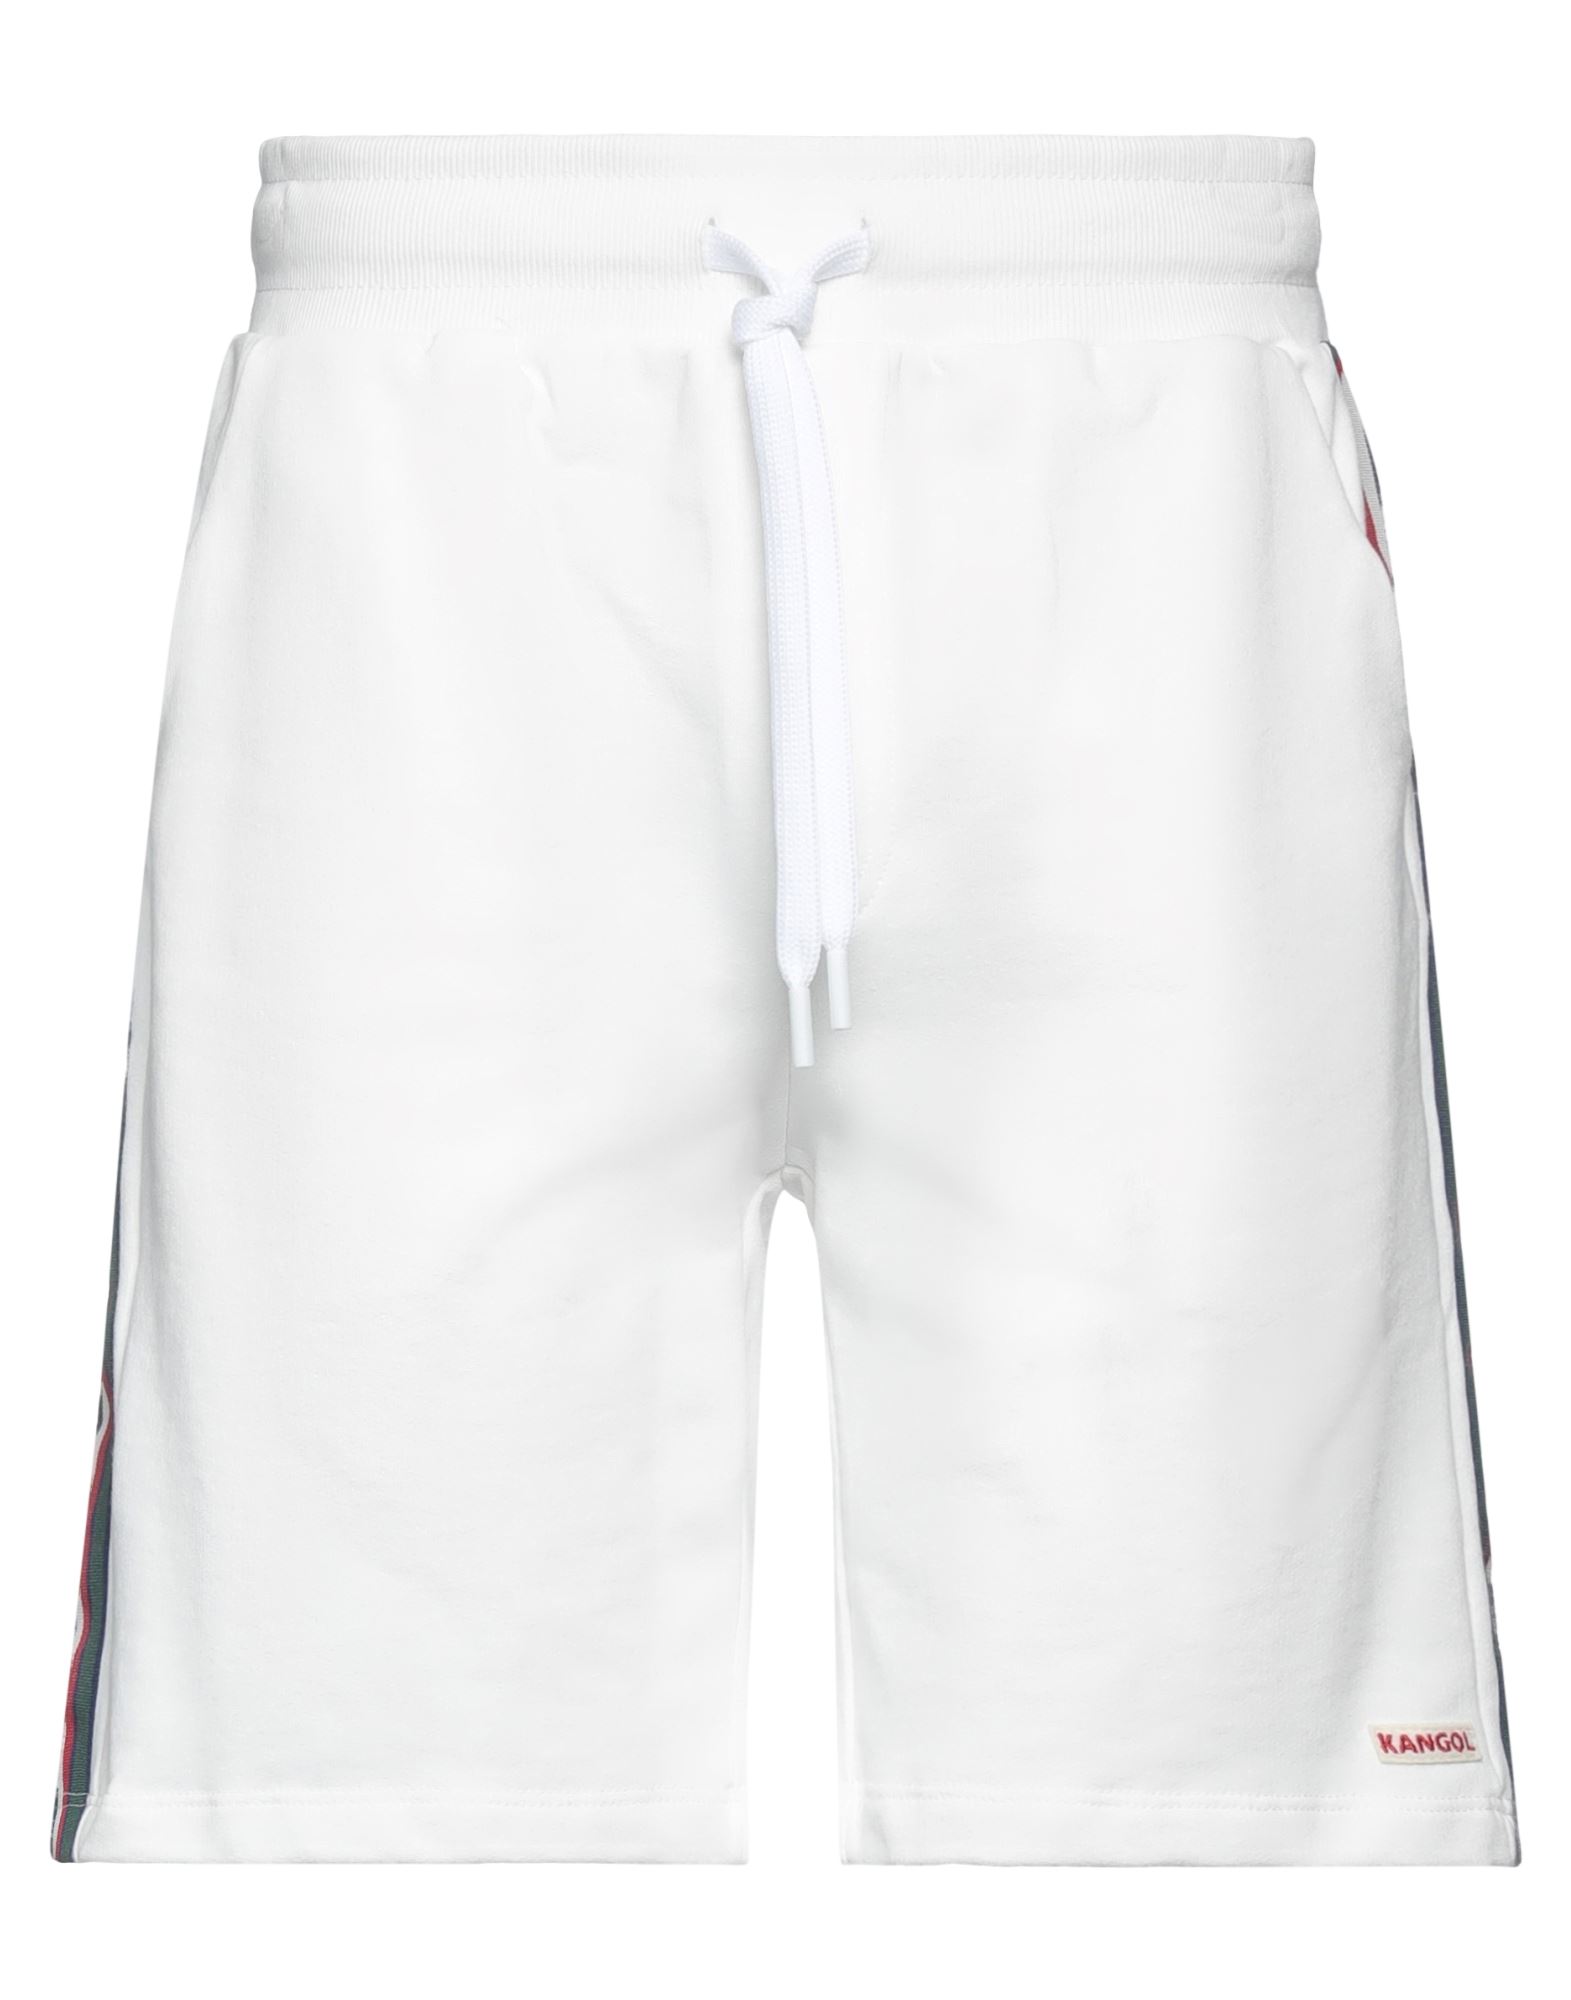 KANGOL Shorts & Bermudashorts Herren Off white von KANGOL